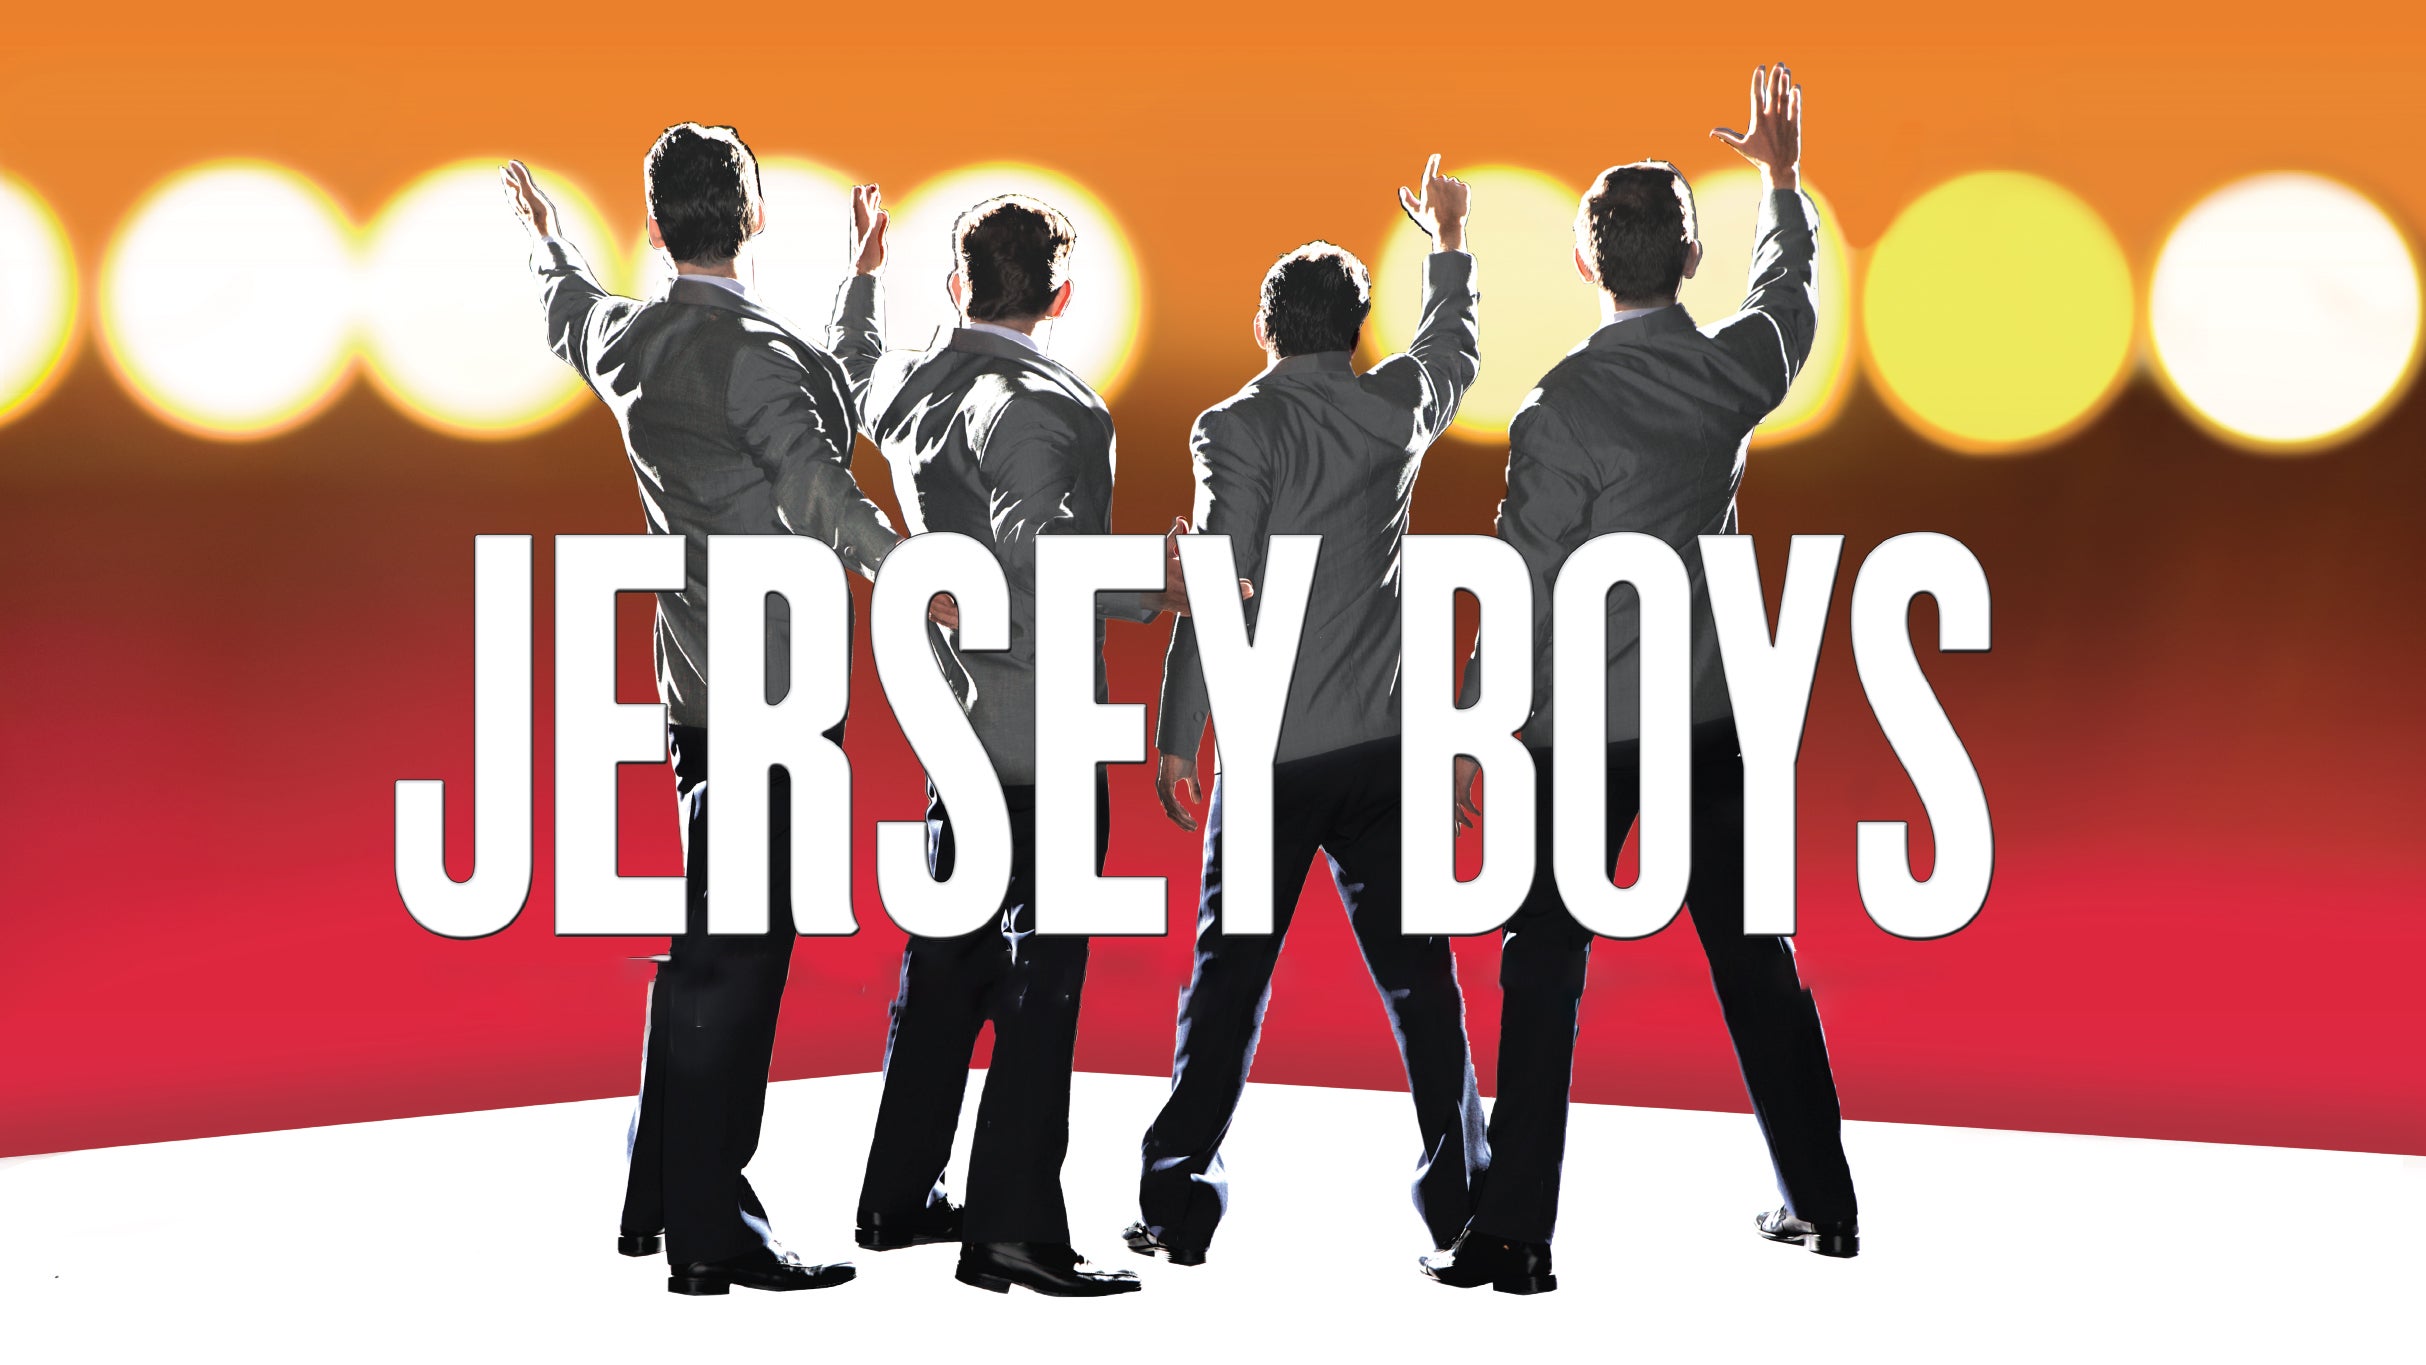 Toby's Dinner Theatre Presents: Jersey Boys